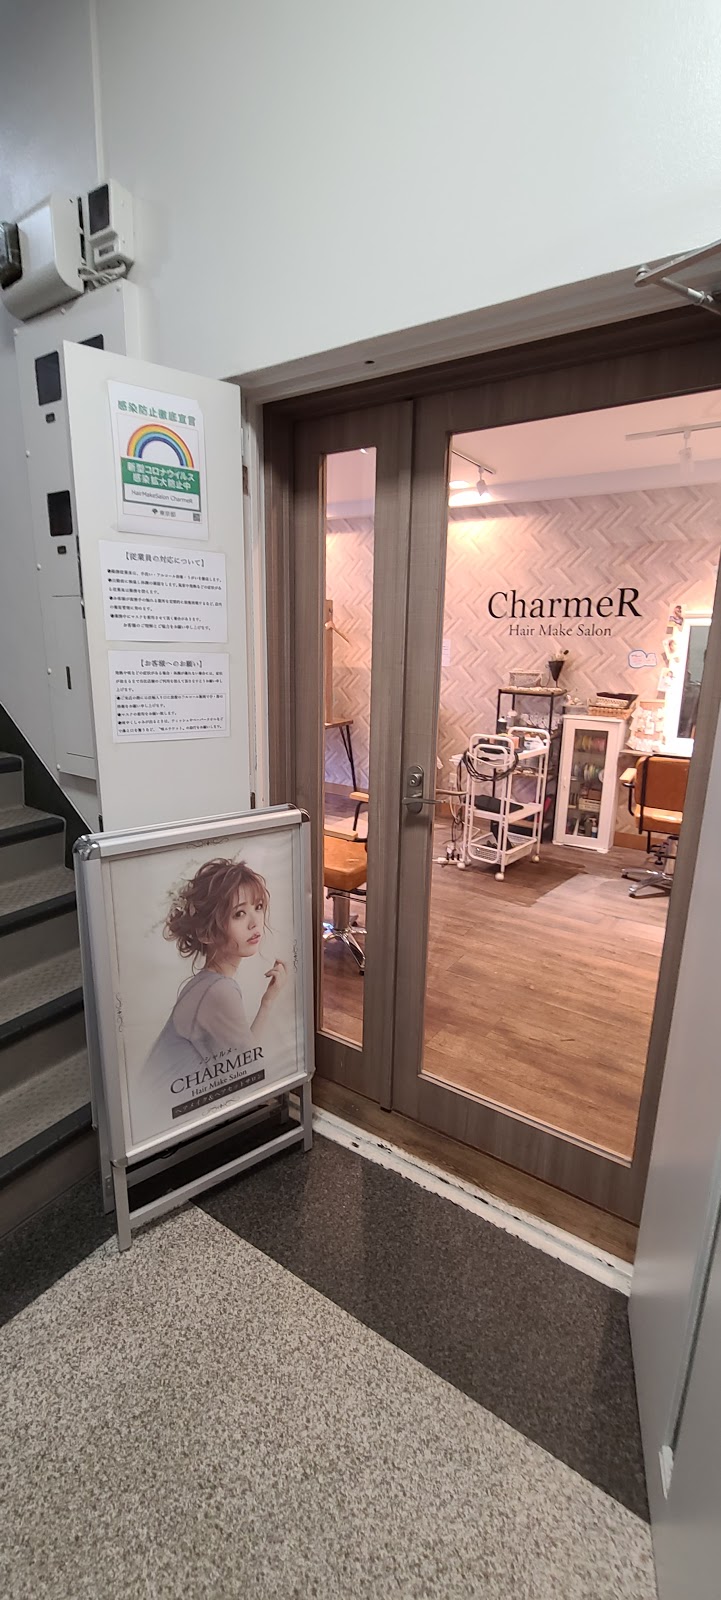 CharmeR 新宿店